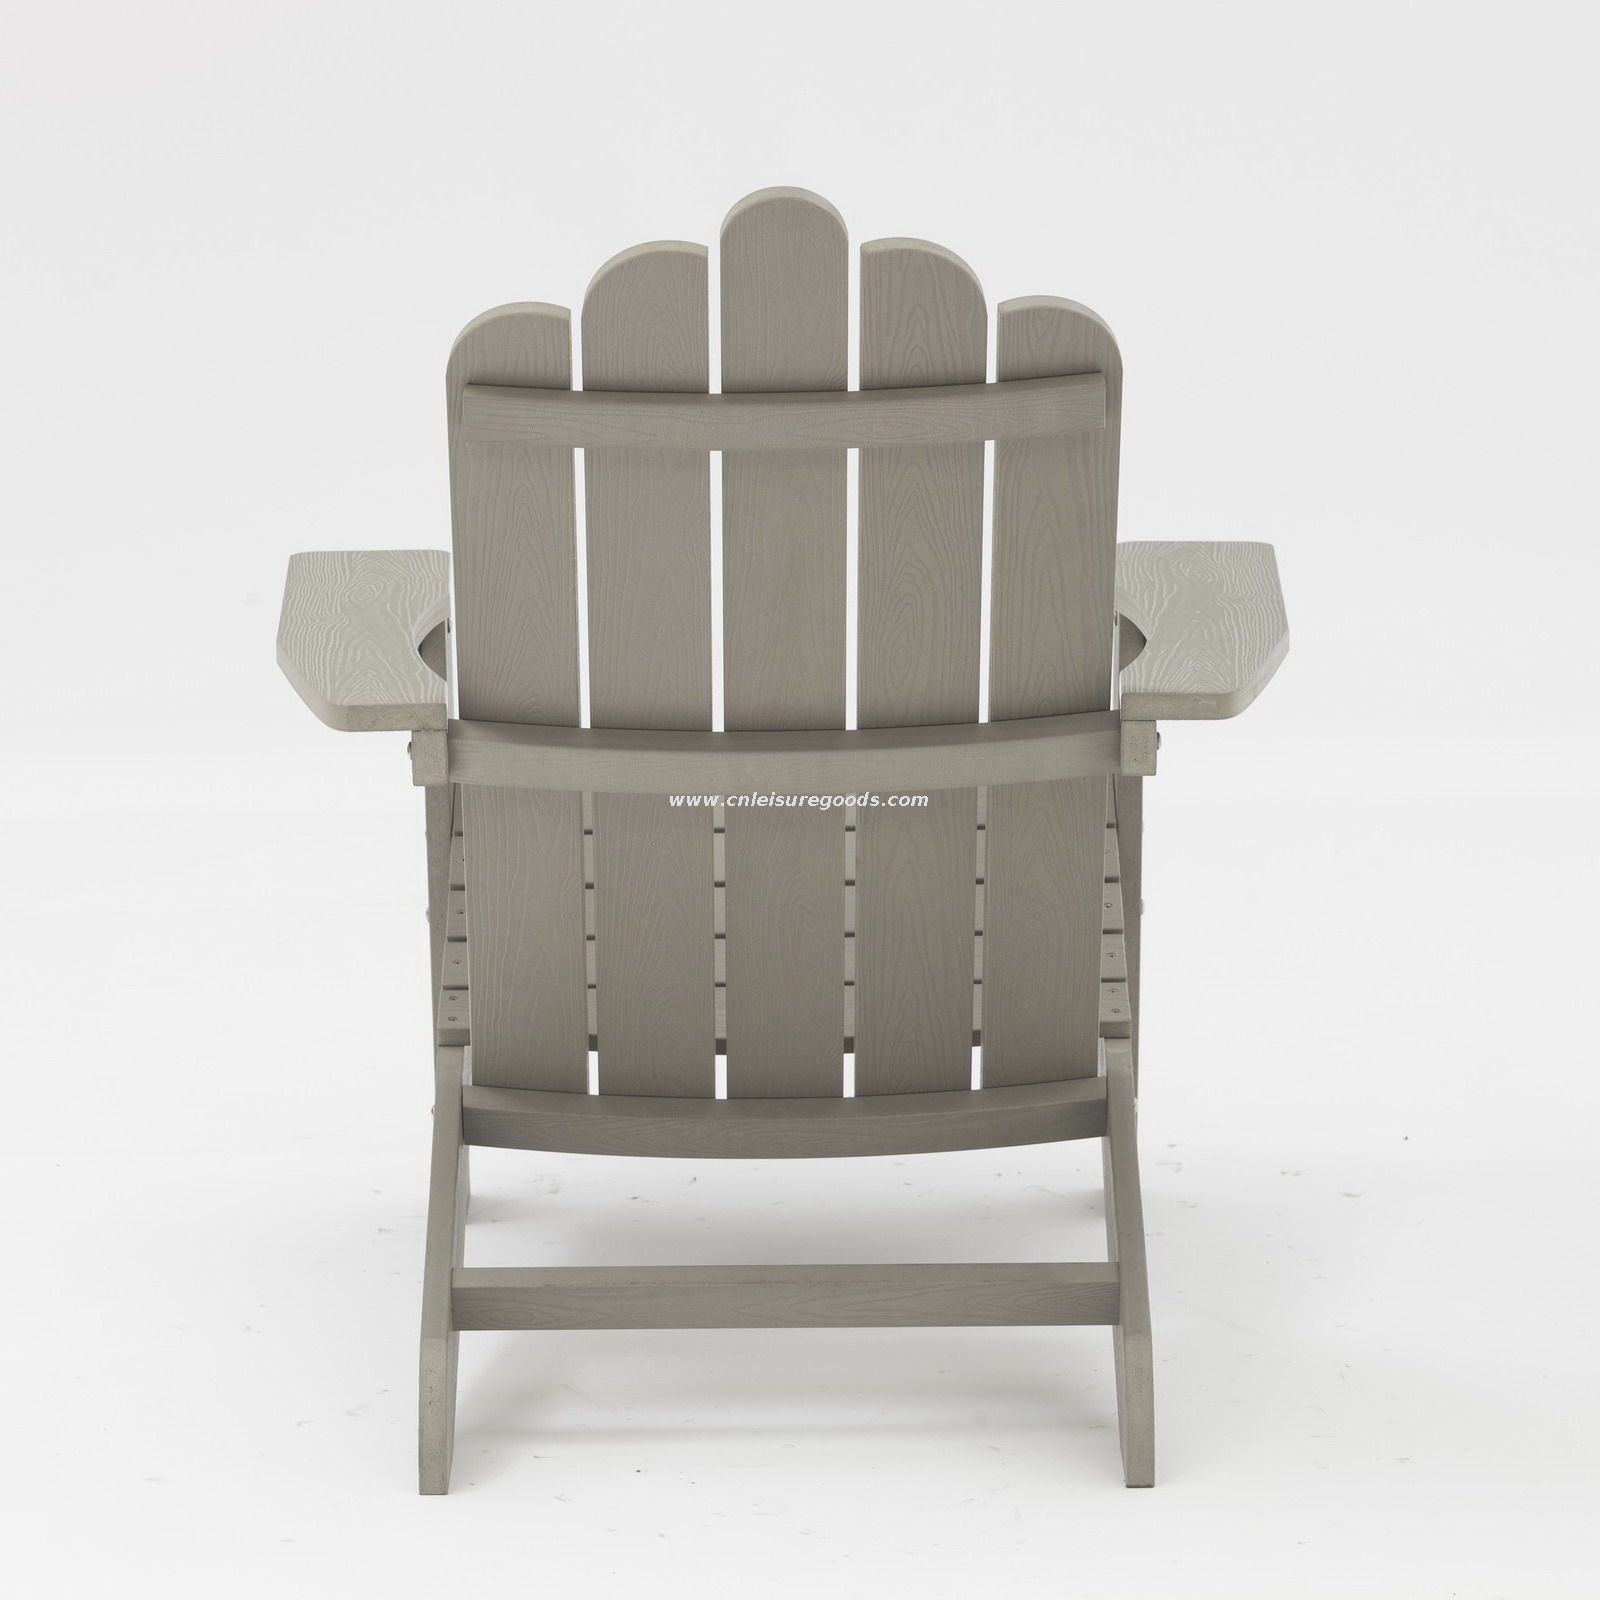 Uplion Waterproof Outdoor Furniture Plastic Wood Beach Chair Classic Garden Adirondack Chairs